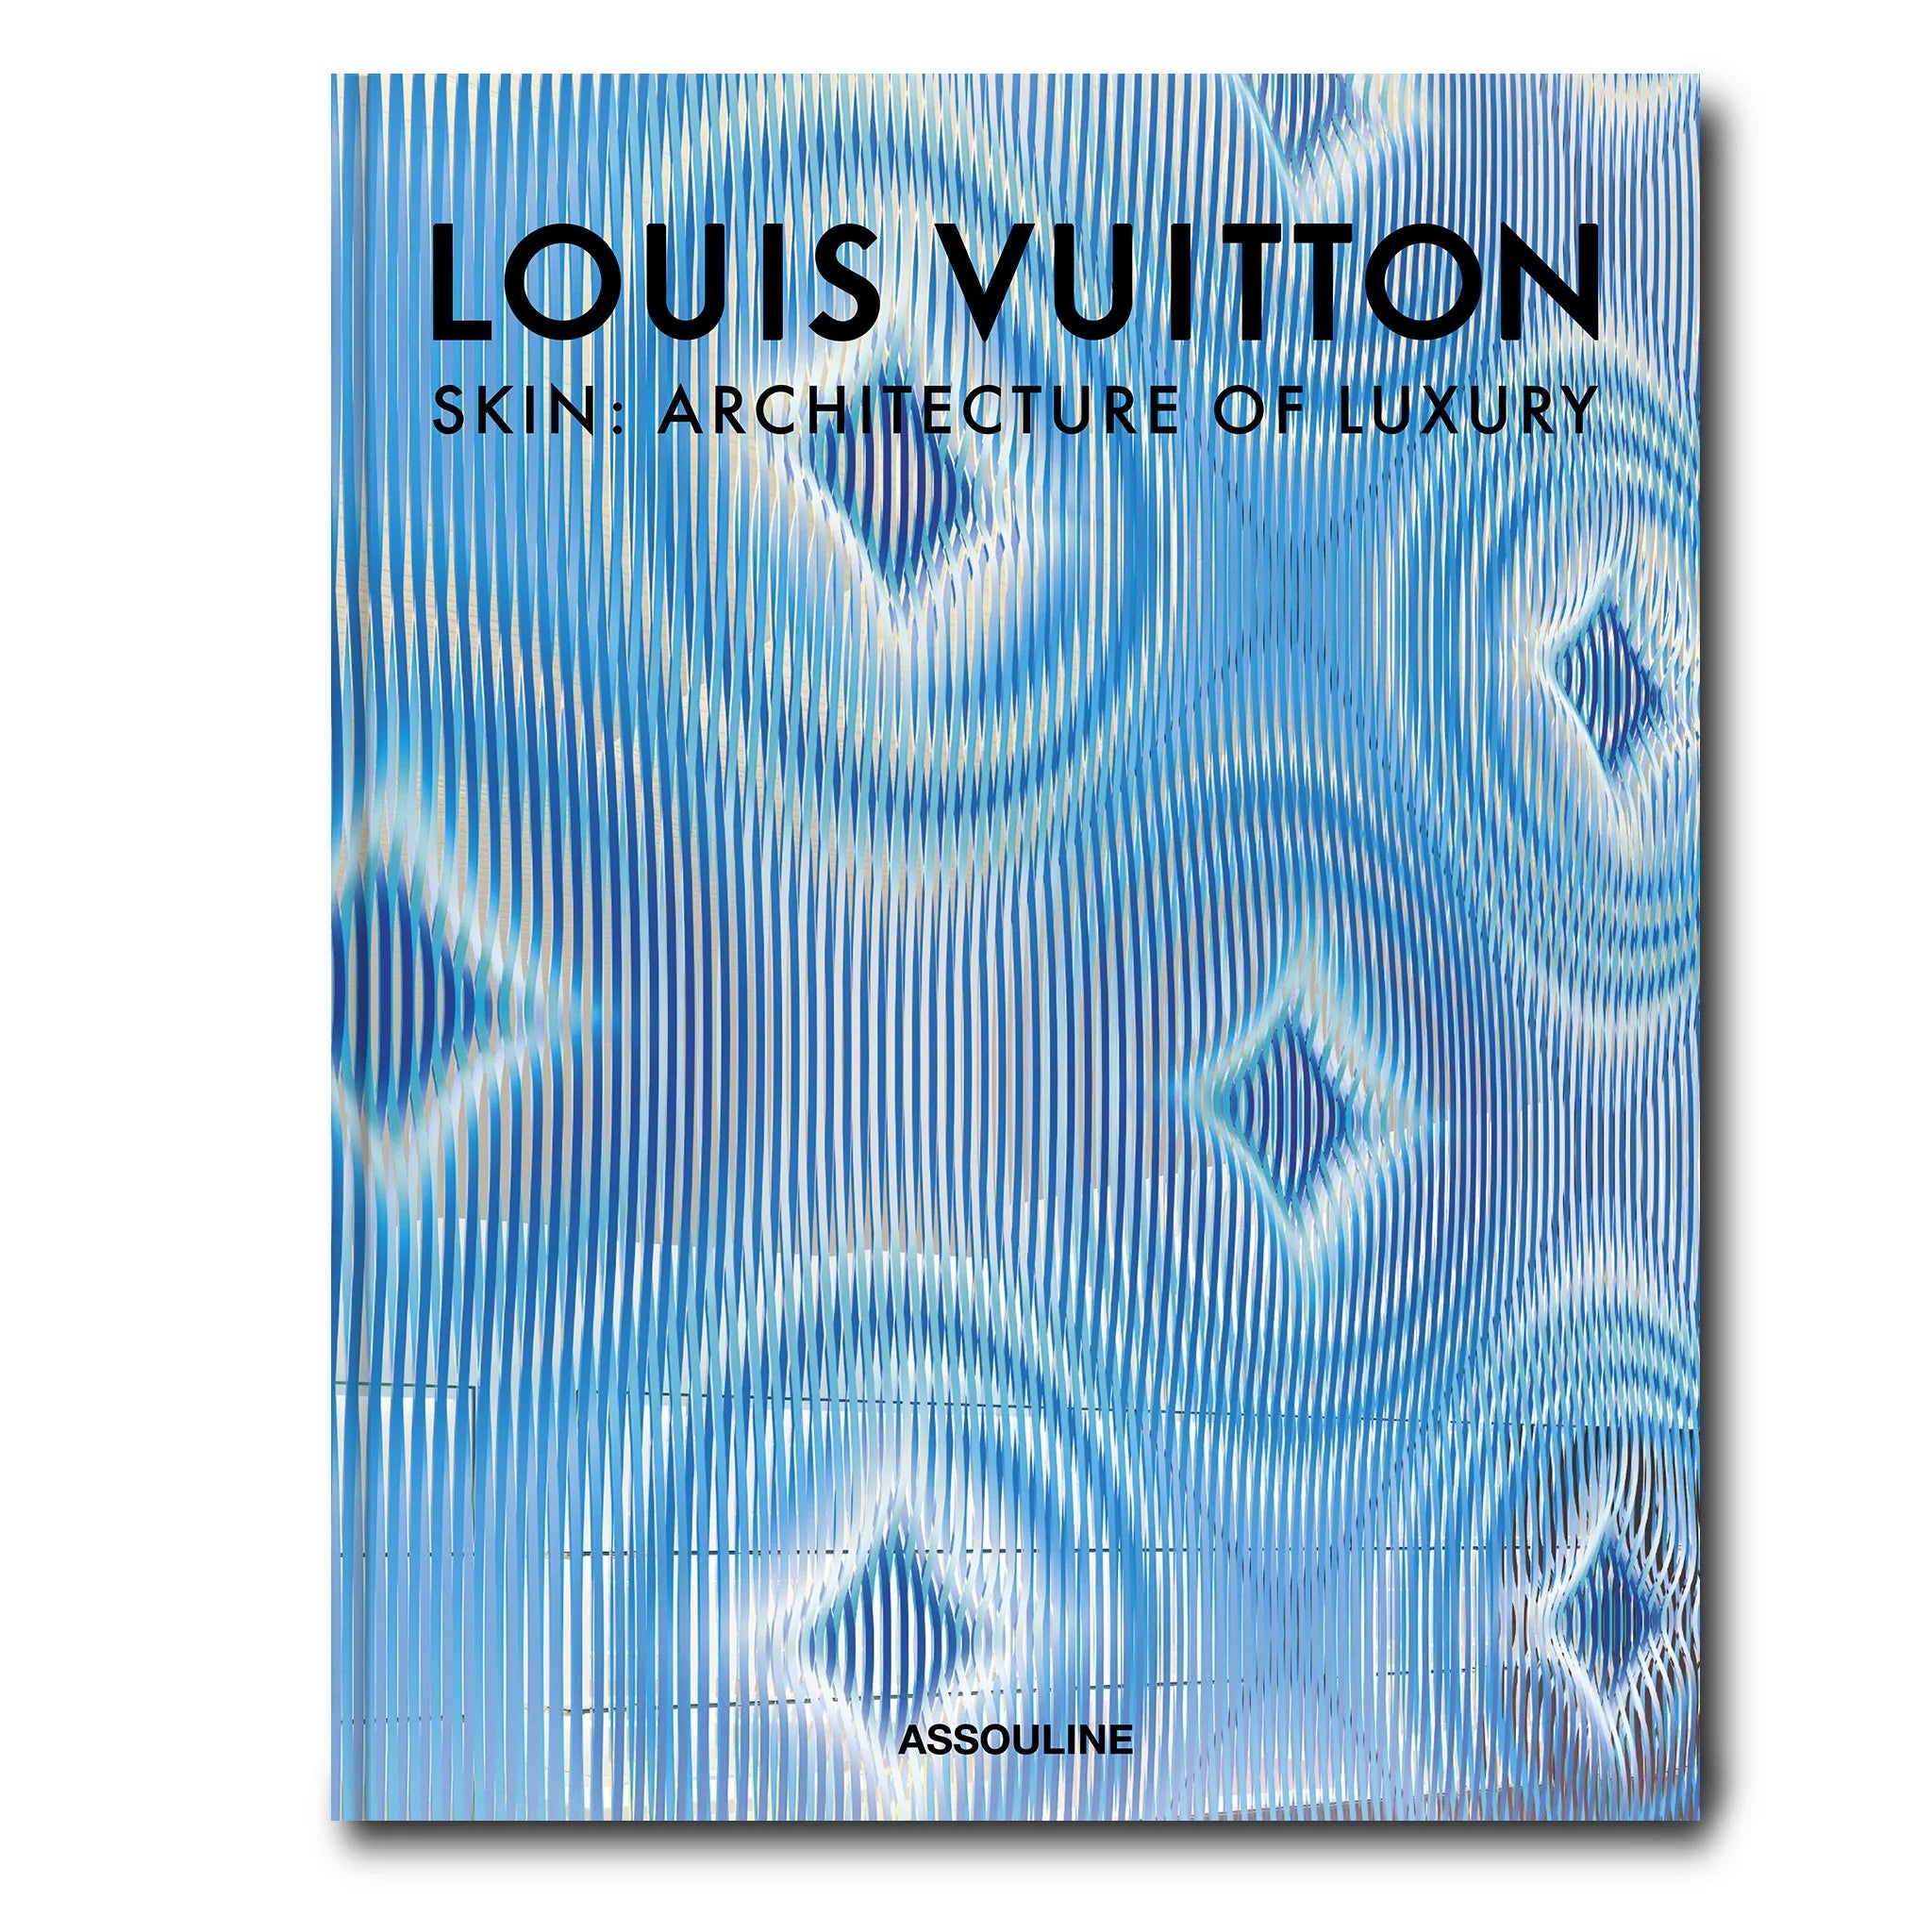 Louis Vuitton Skin (Beijing Cover): by Goldberger, Paul